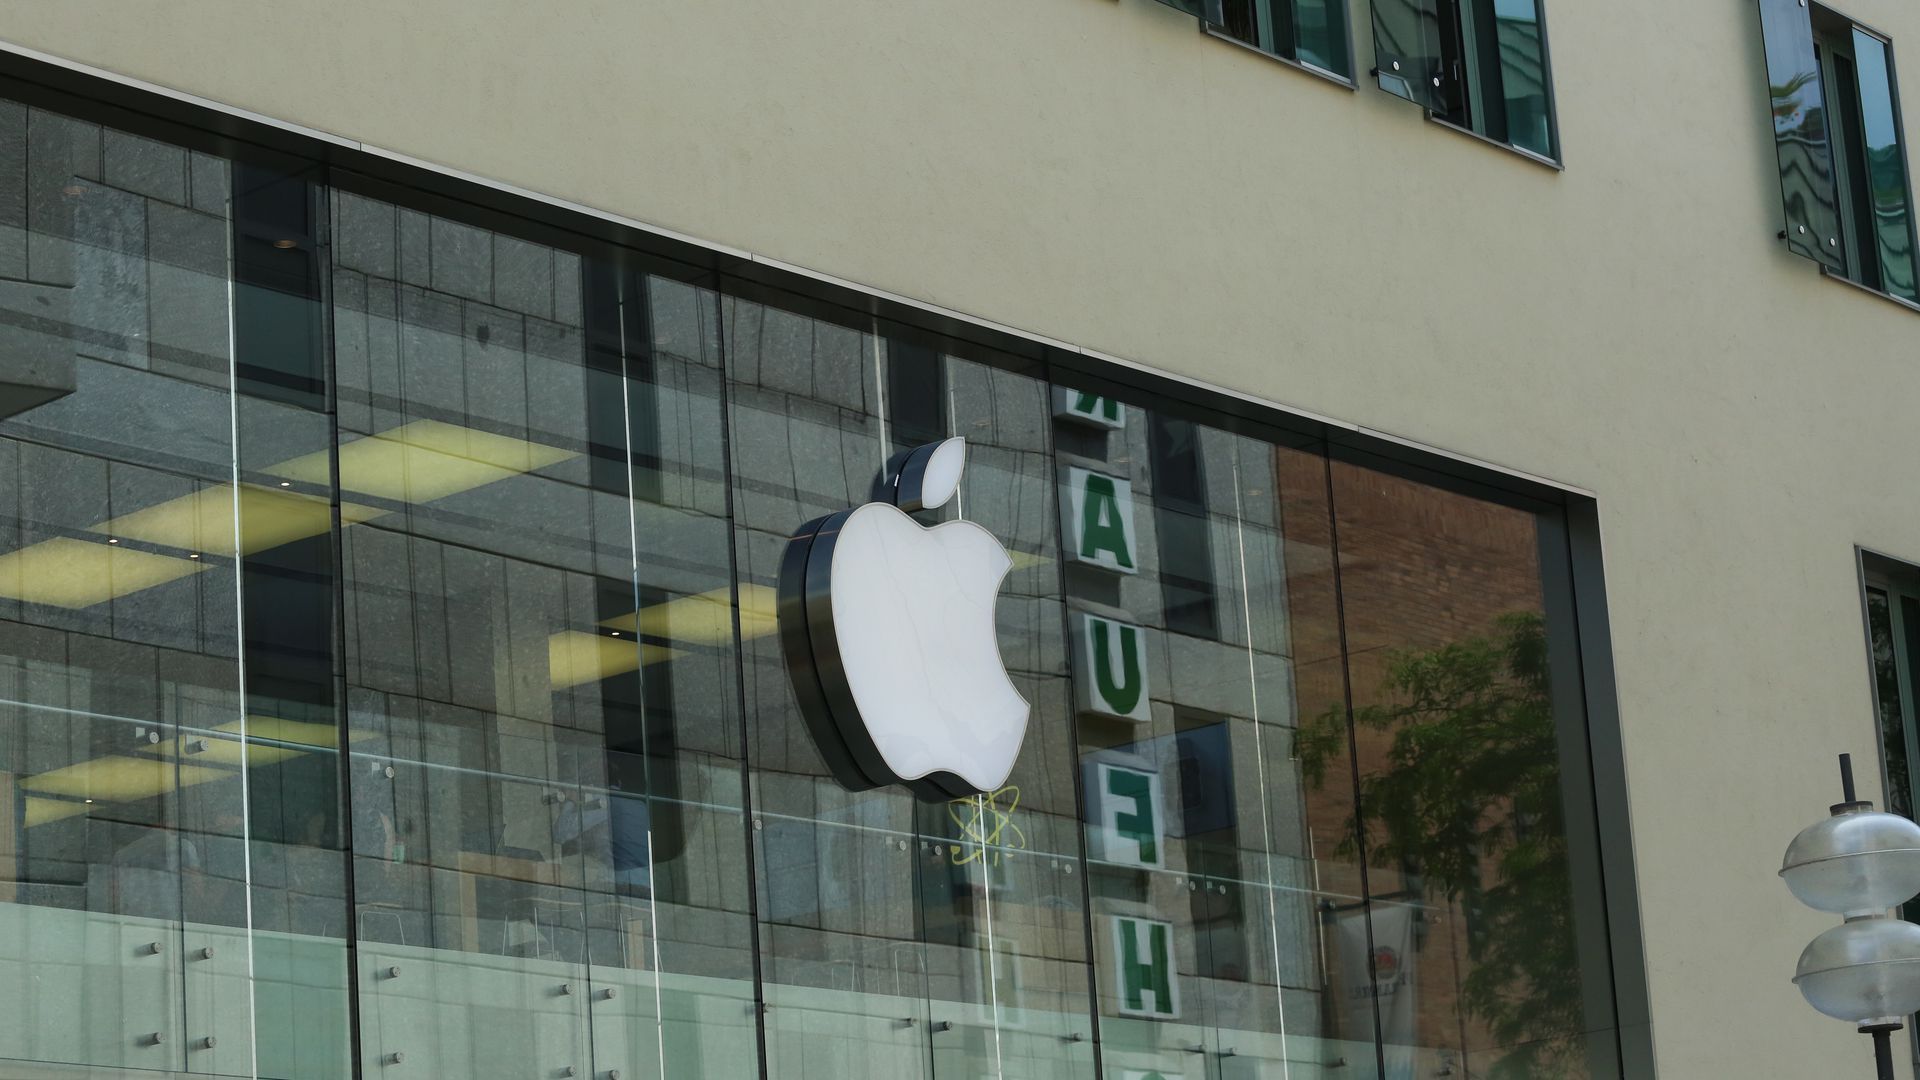 Apple store window with Apple logo